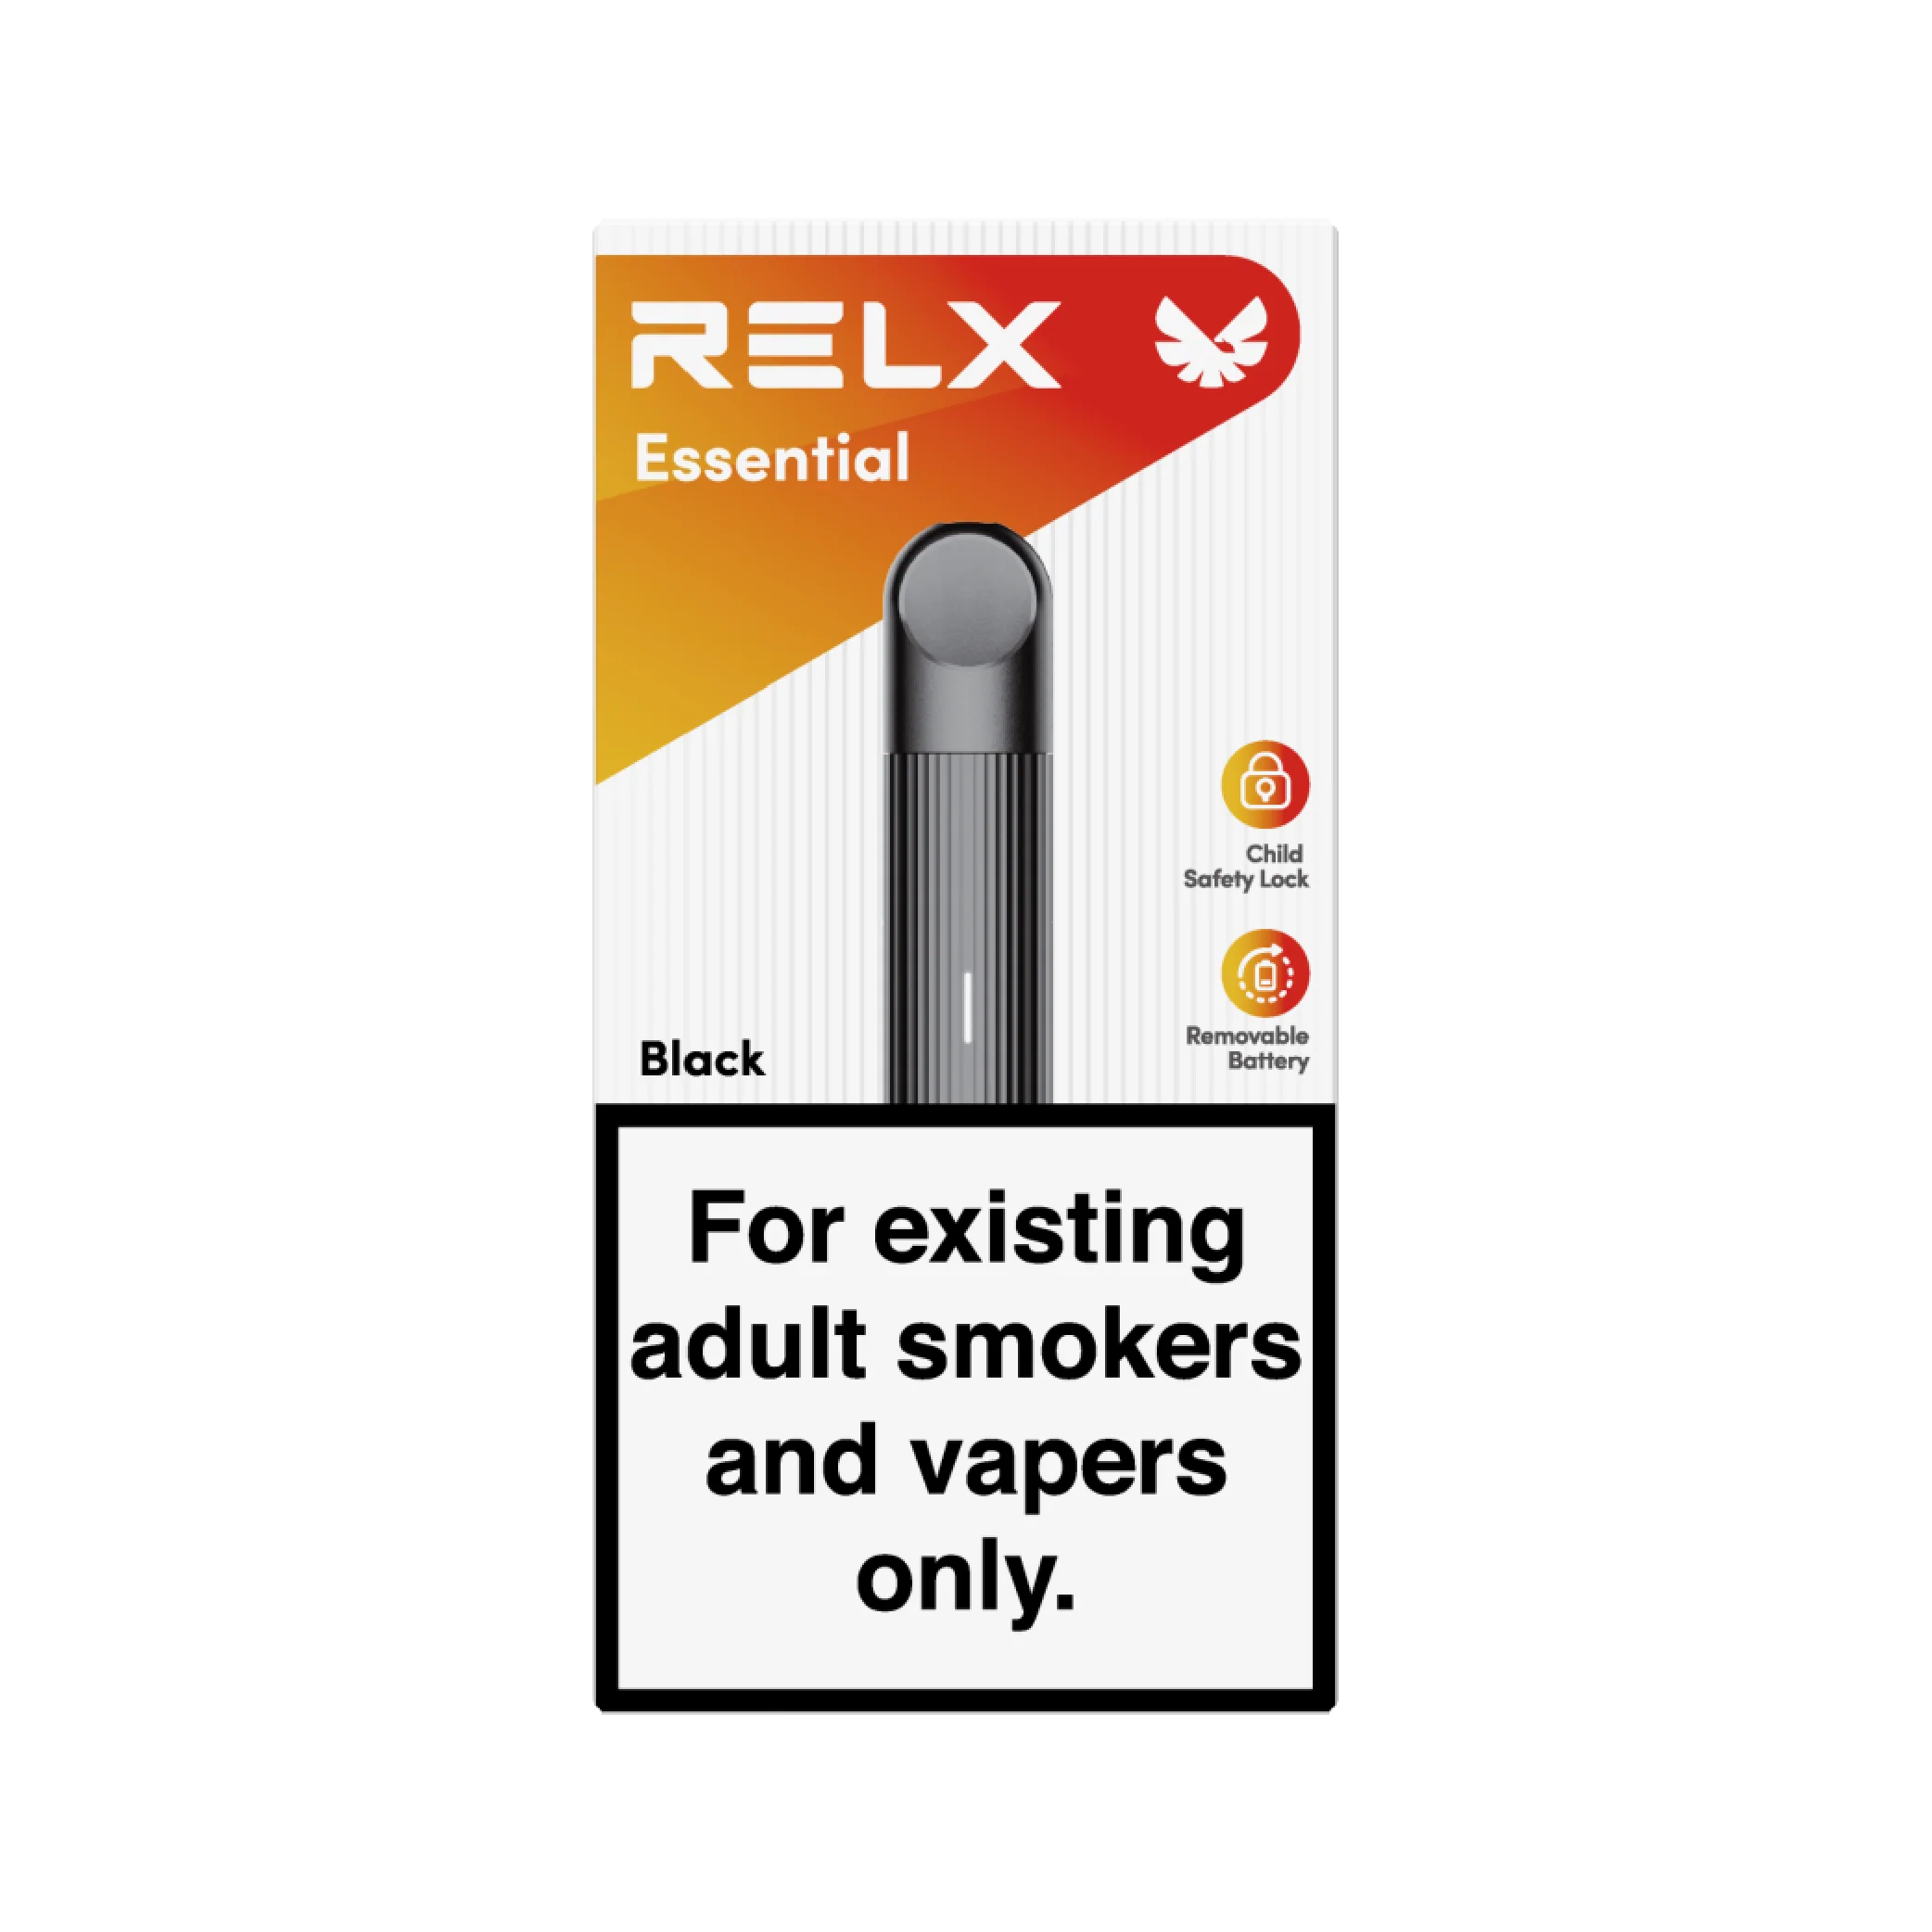 RELXエッセンシャルデバイス